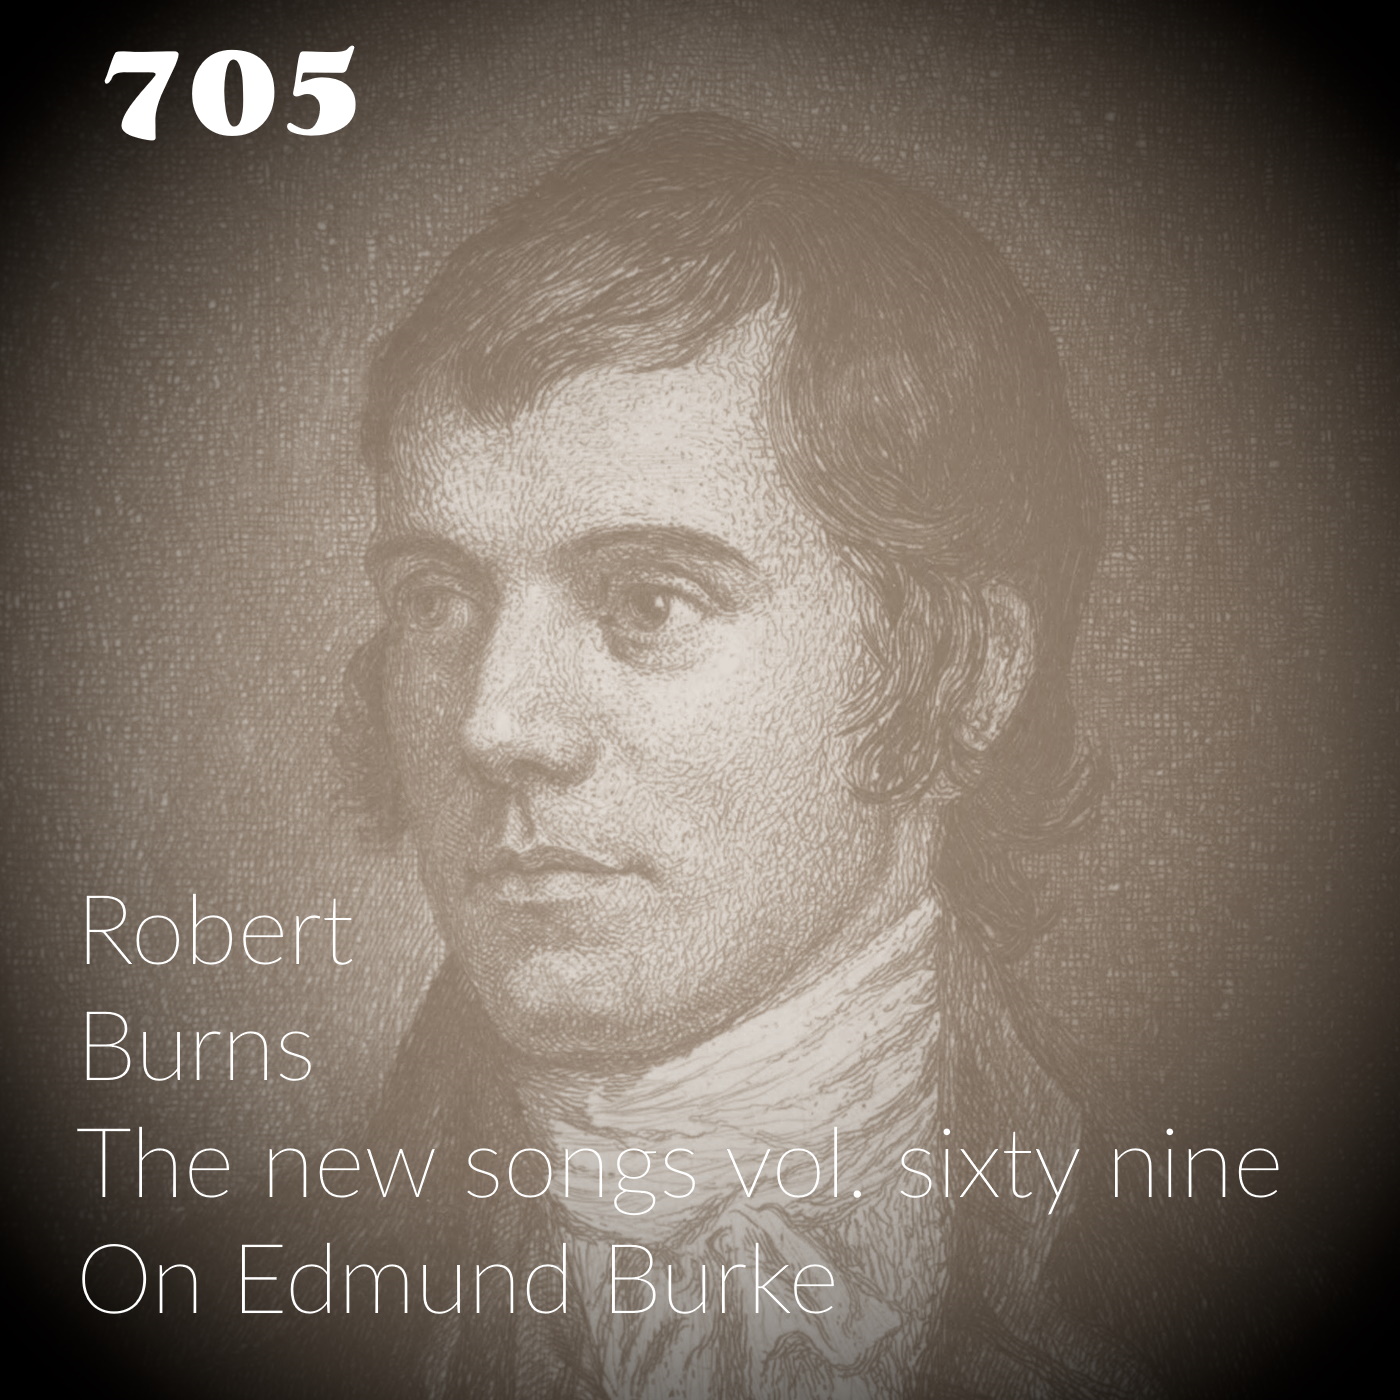 On Edmund Burke